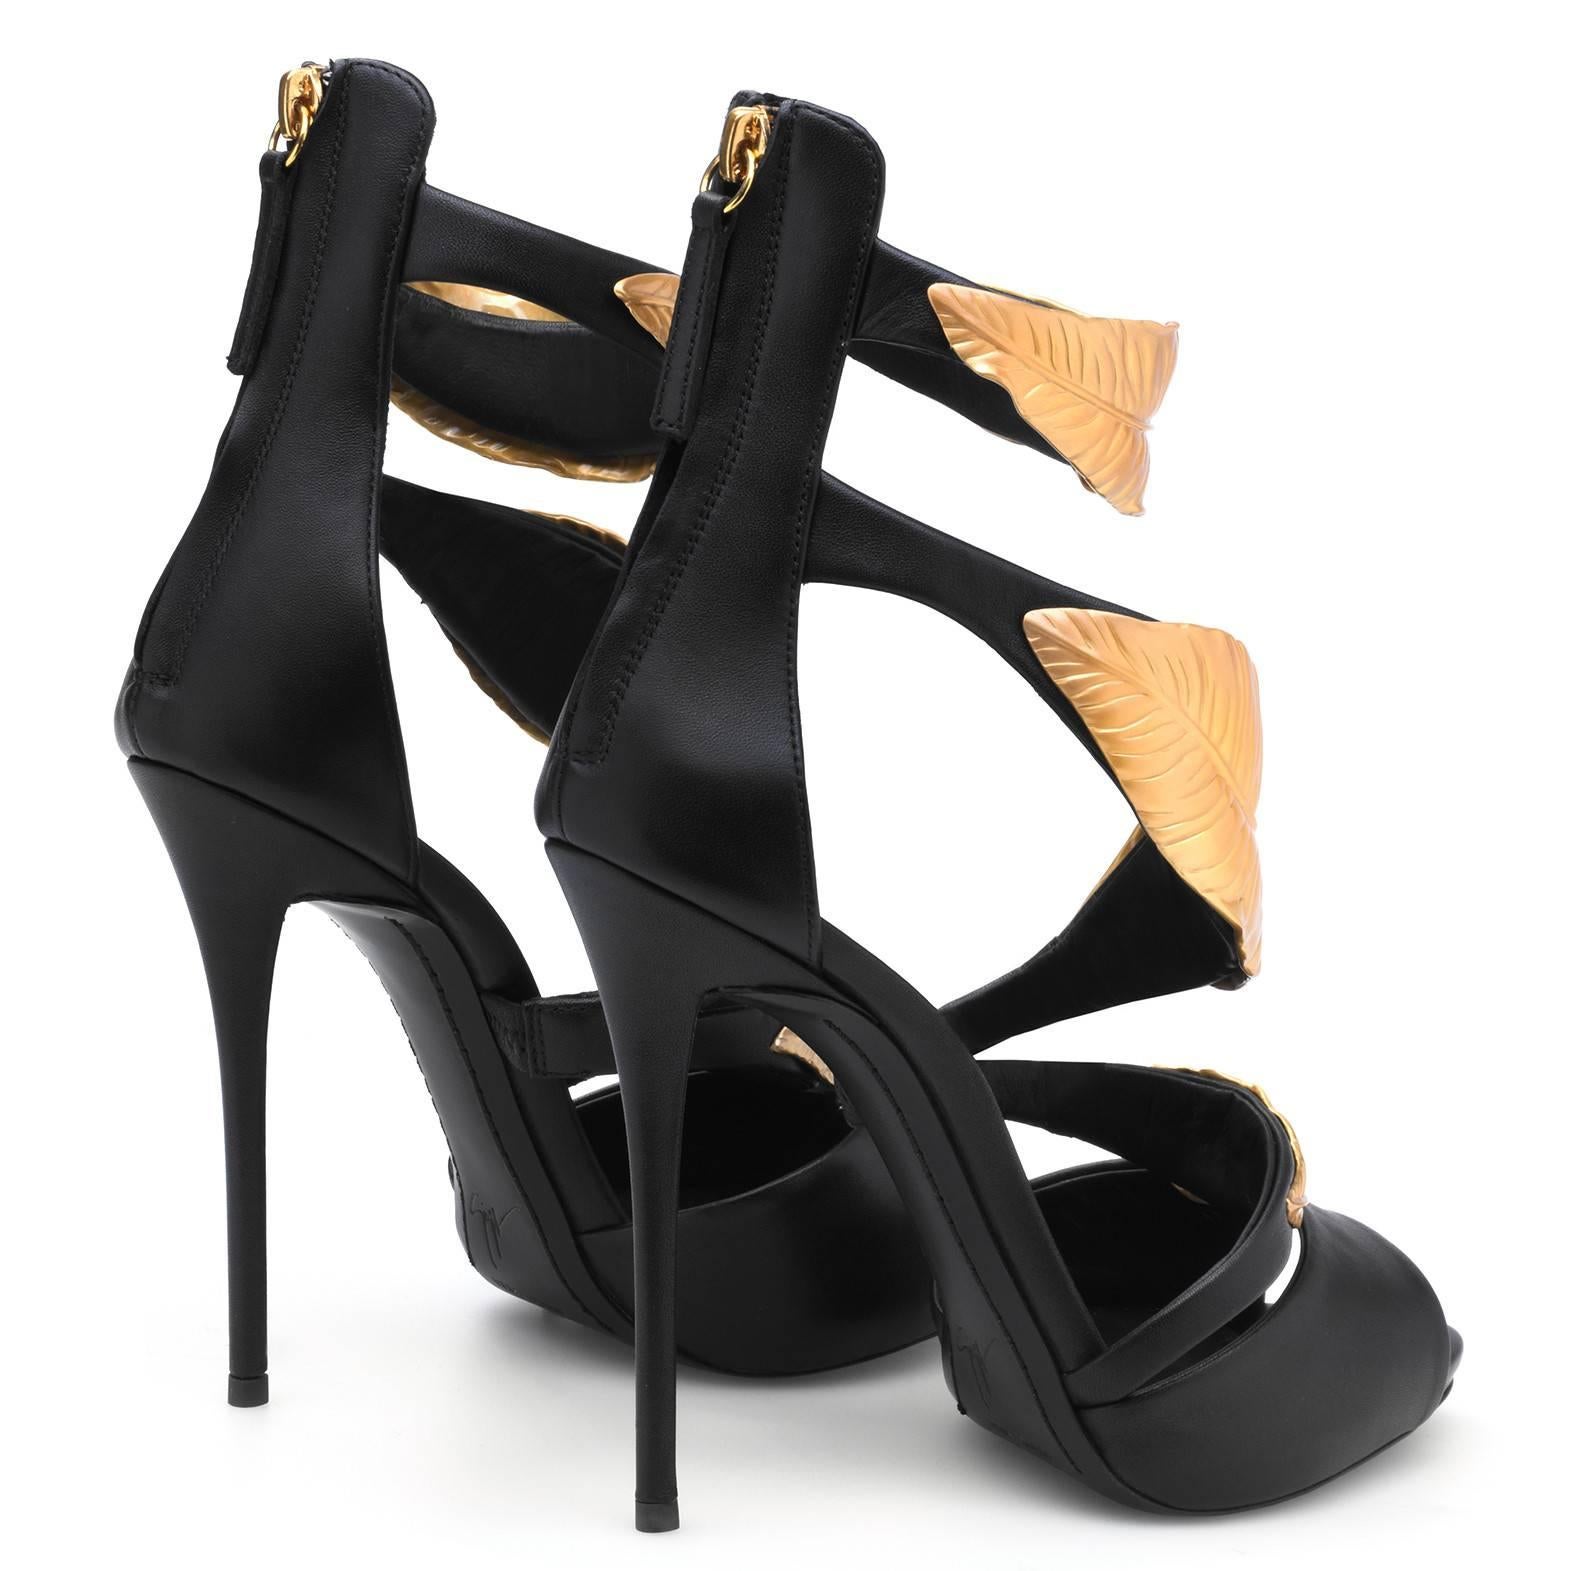 Women's Giuseppe Zanotti New Black Leather Gold Leaf Evening Sandals Heels in Box 